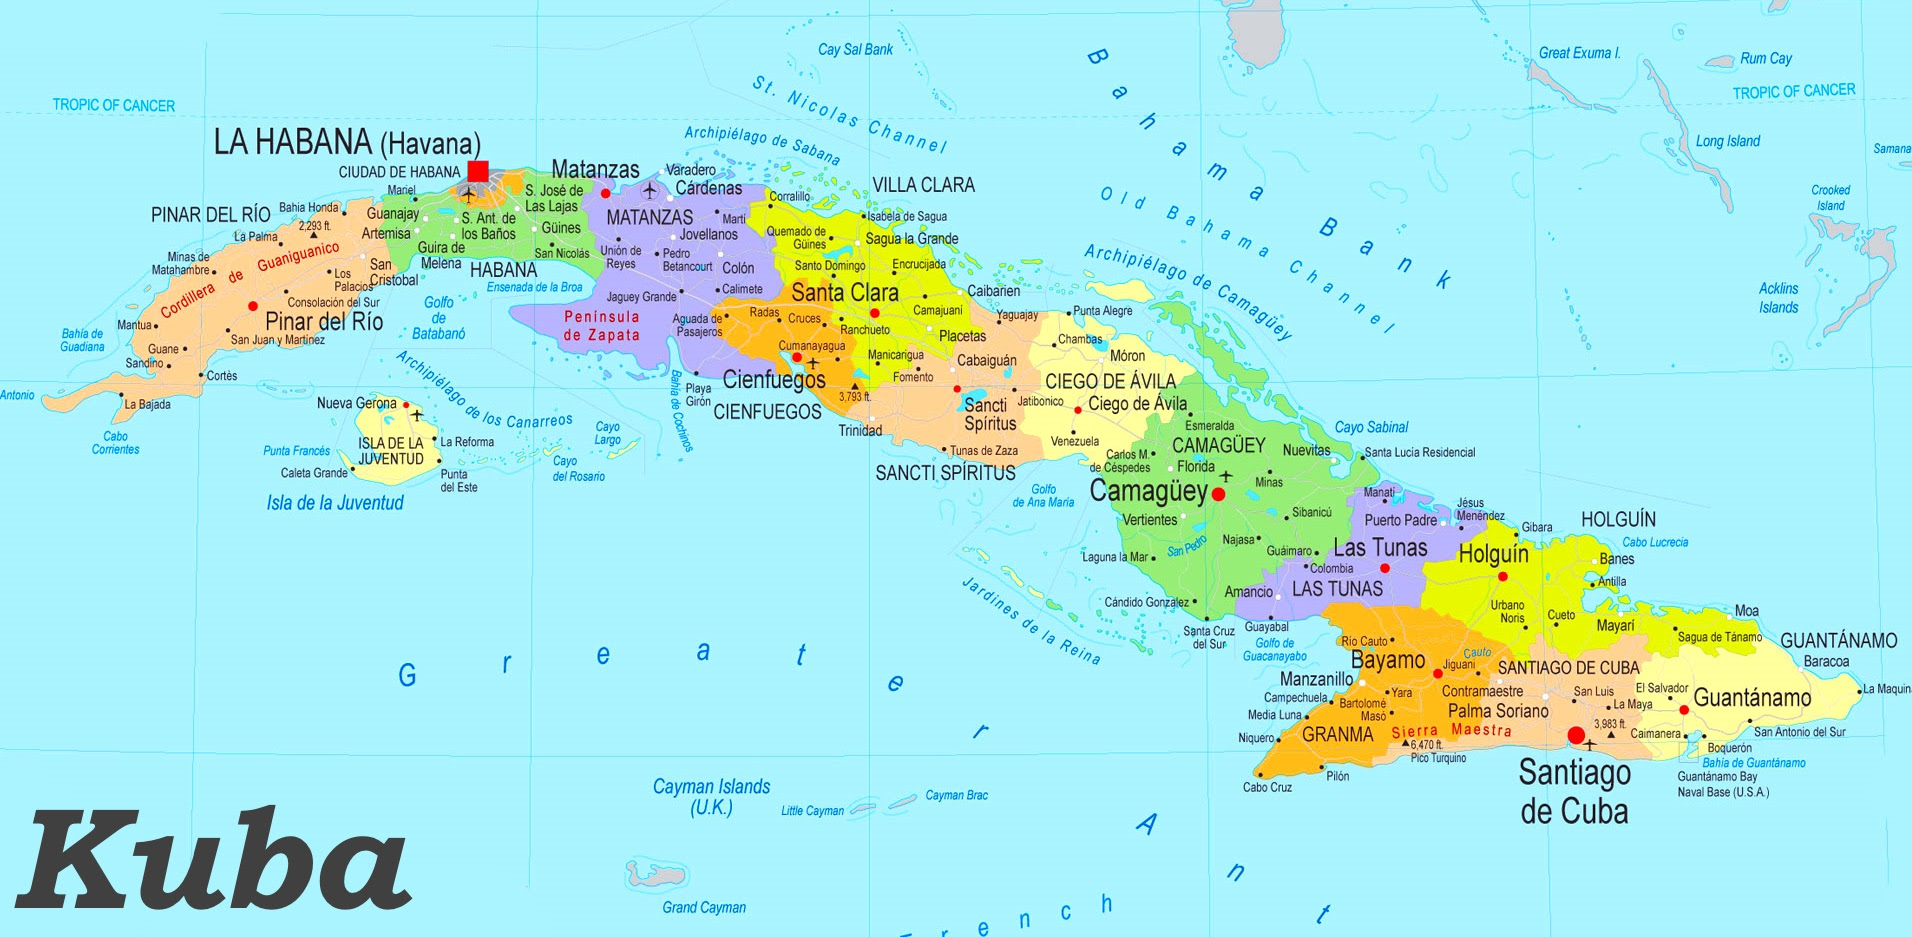 Karte Kuba | Karte